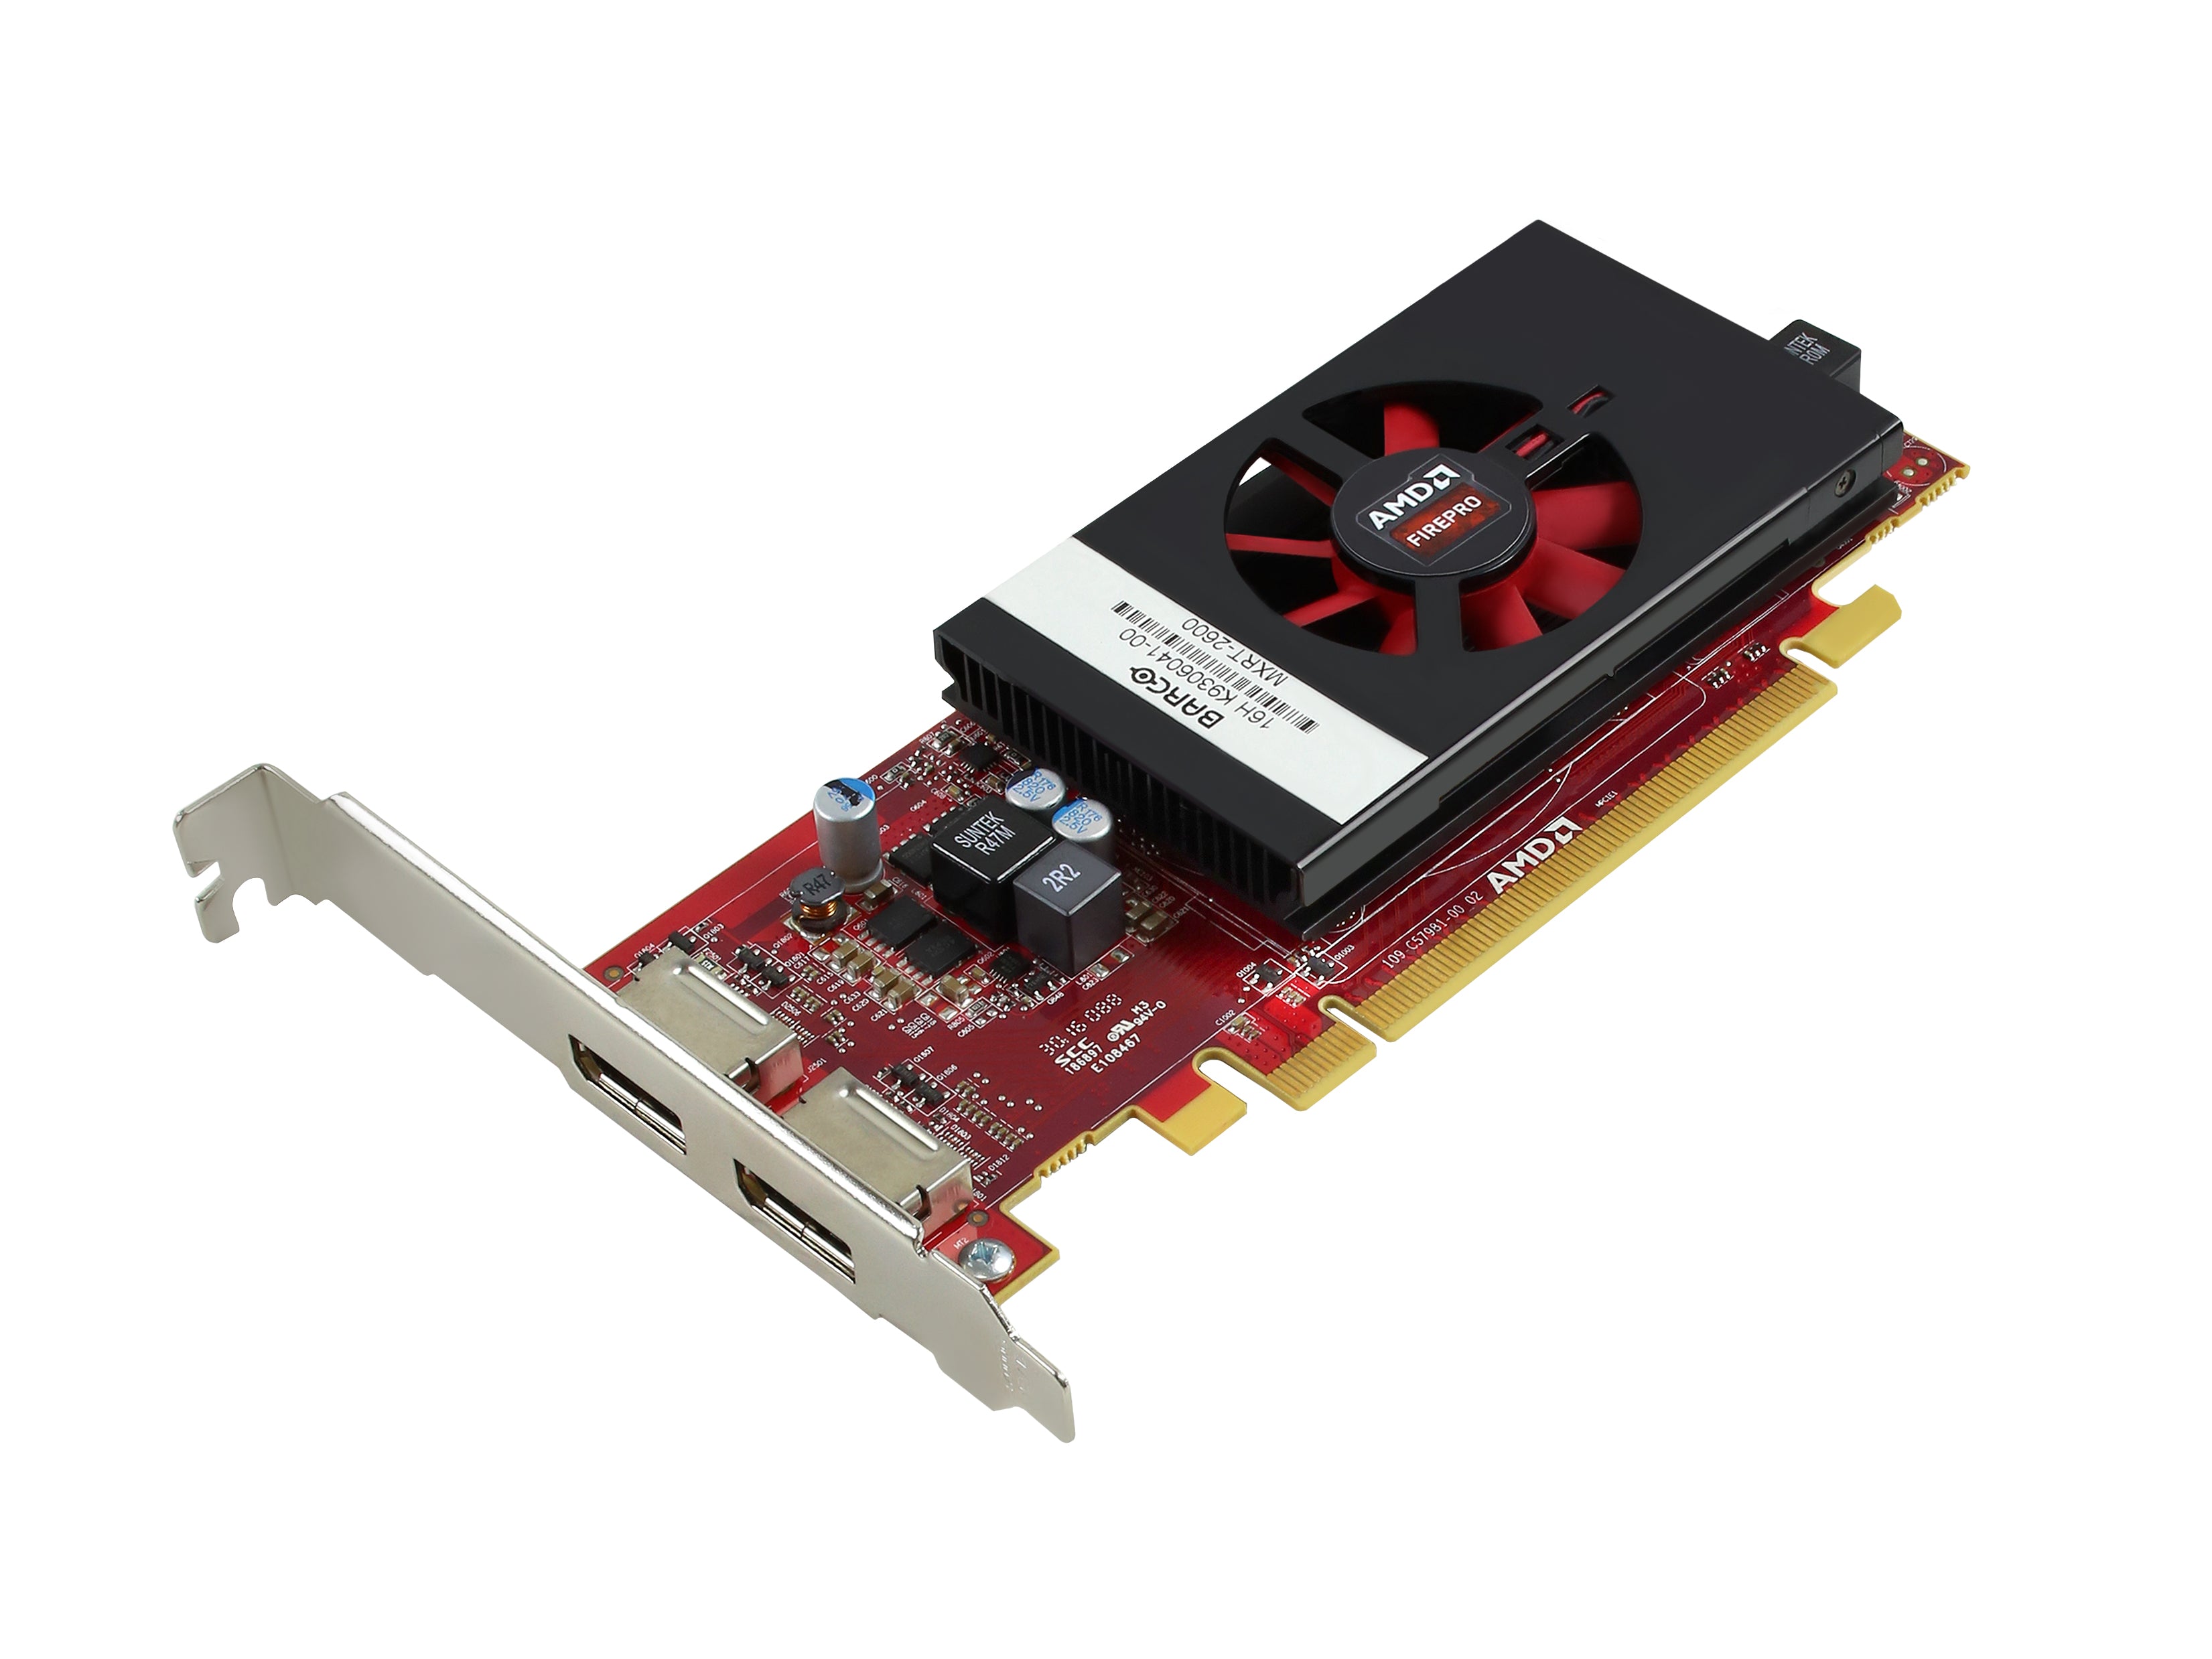 Barco MXRT-2600 2GB PCIe グラフィック カード (K9306041) Monitors.com